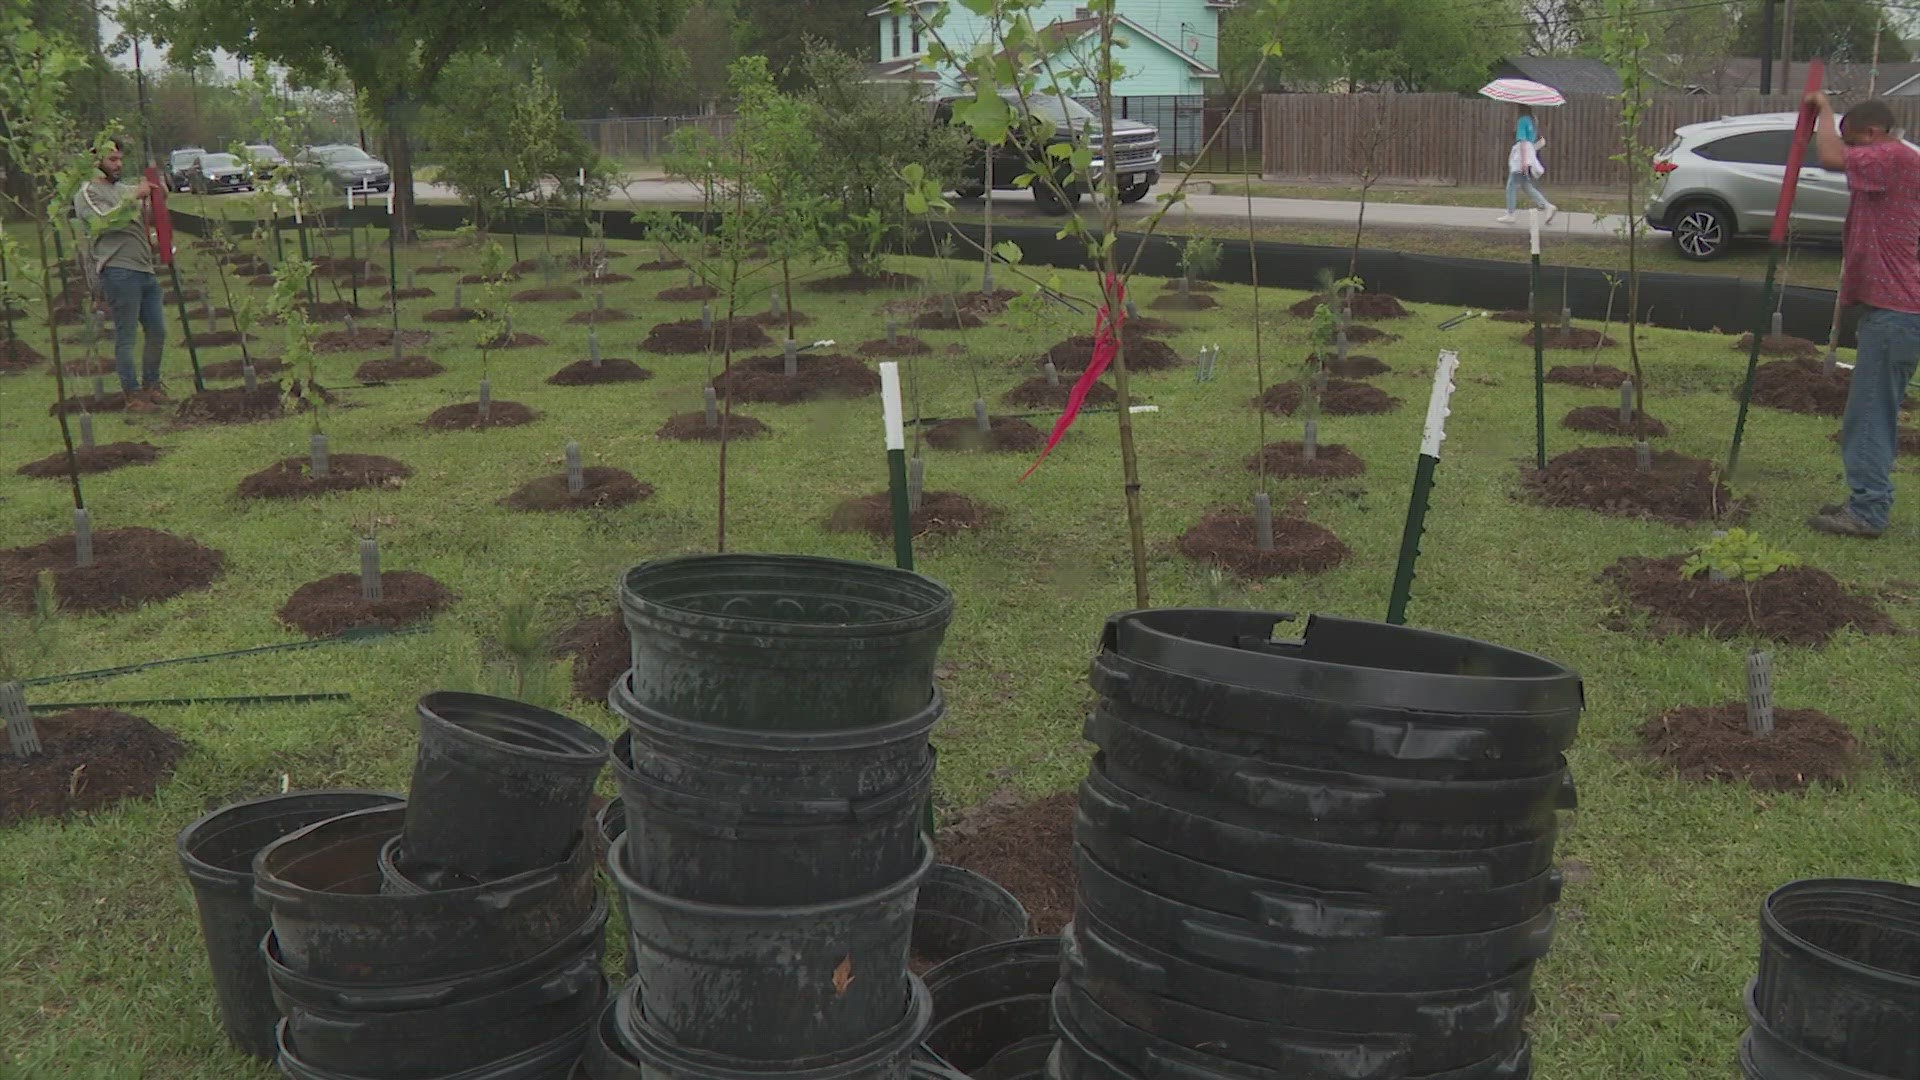 NRG helps plant trees around Houston